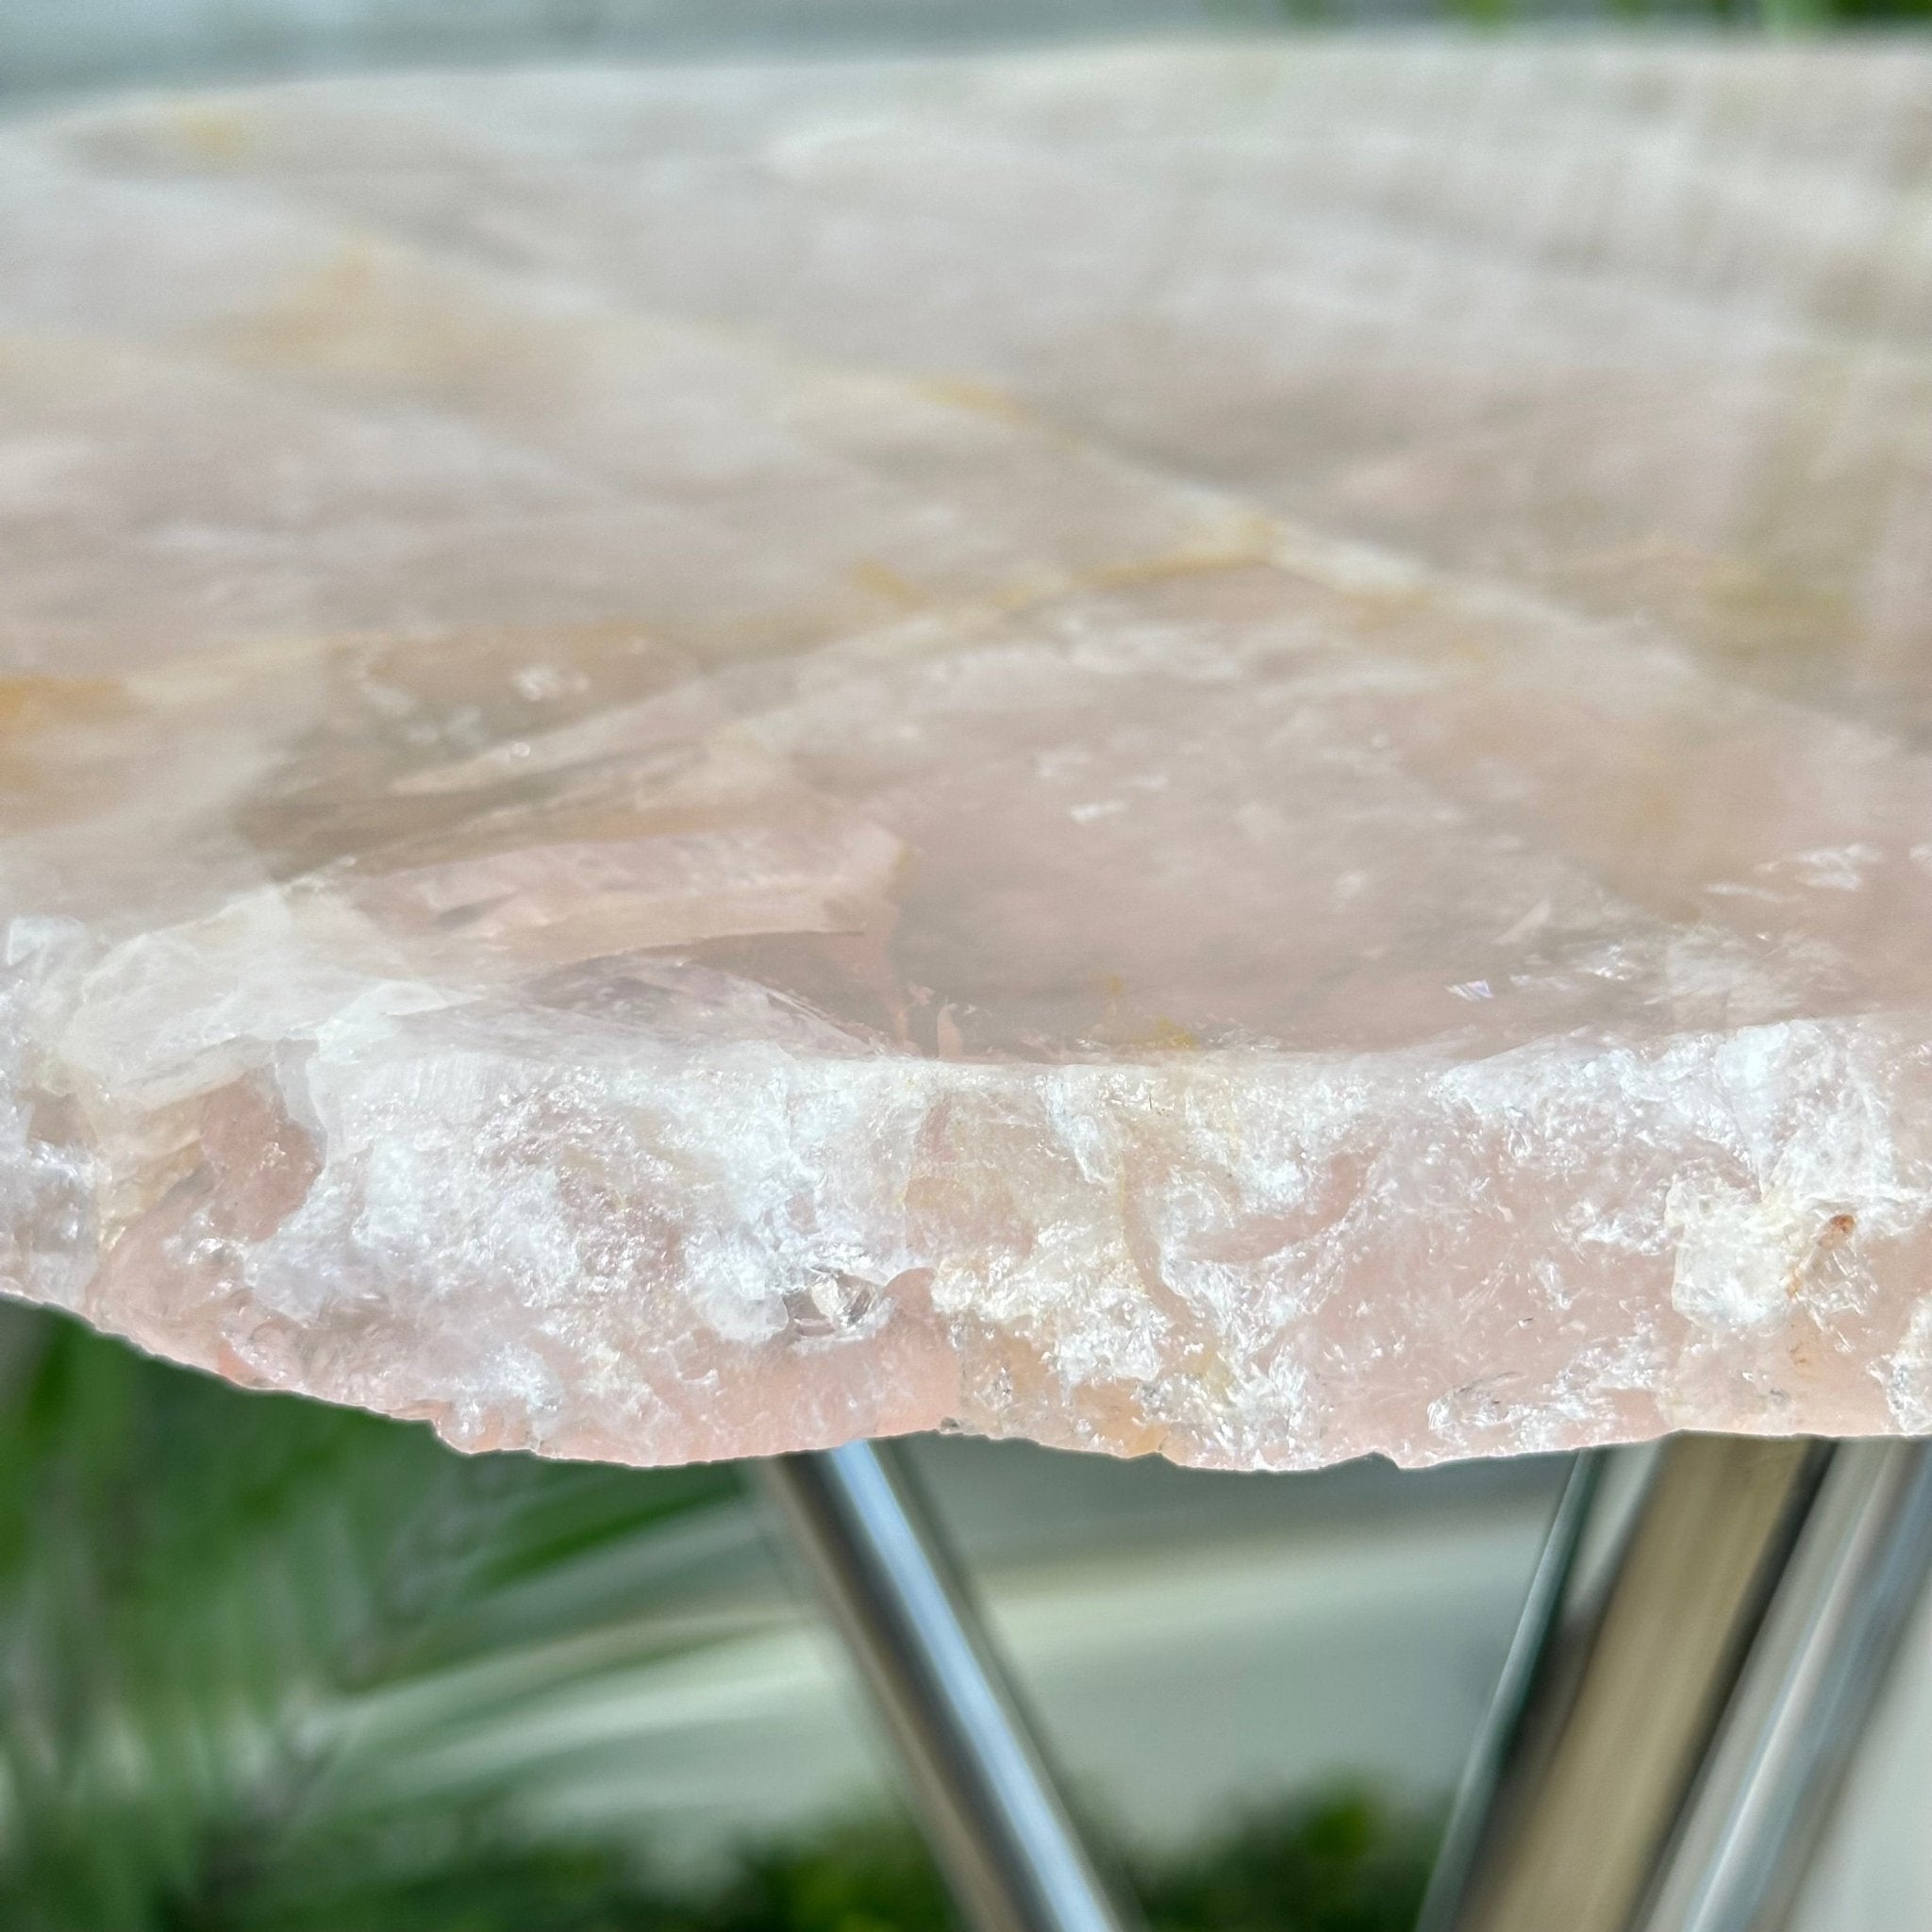 Natural Rose Quartz Side Table on Chrome Metal Base, 24.5" Tall #1341RQ-001 - Brazil GemsBrazil GemsNatural Rose Quartz Side Table on Chrome Metal Base, 24.5" Tall #1341RQ-001Tables: Side1341RQ-001